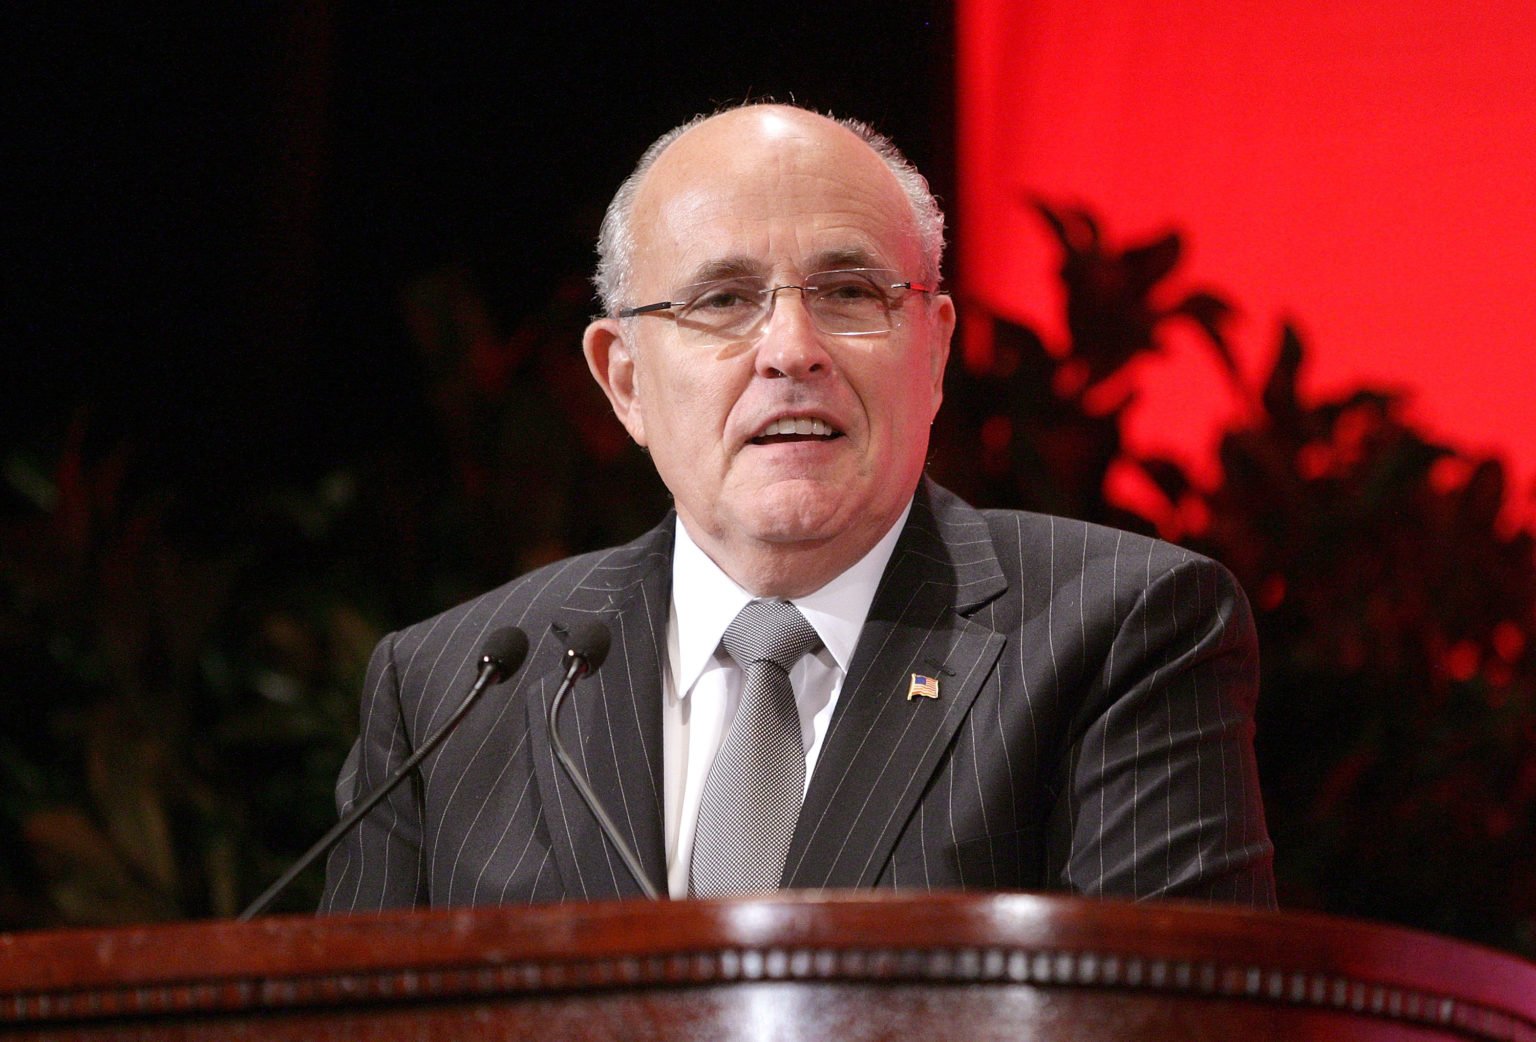 Inside Rudy Giuliani’s net worth